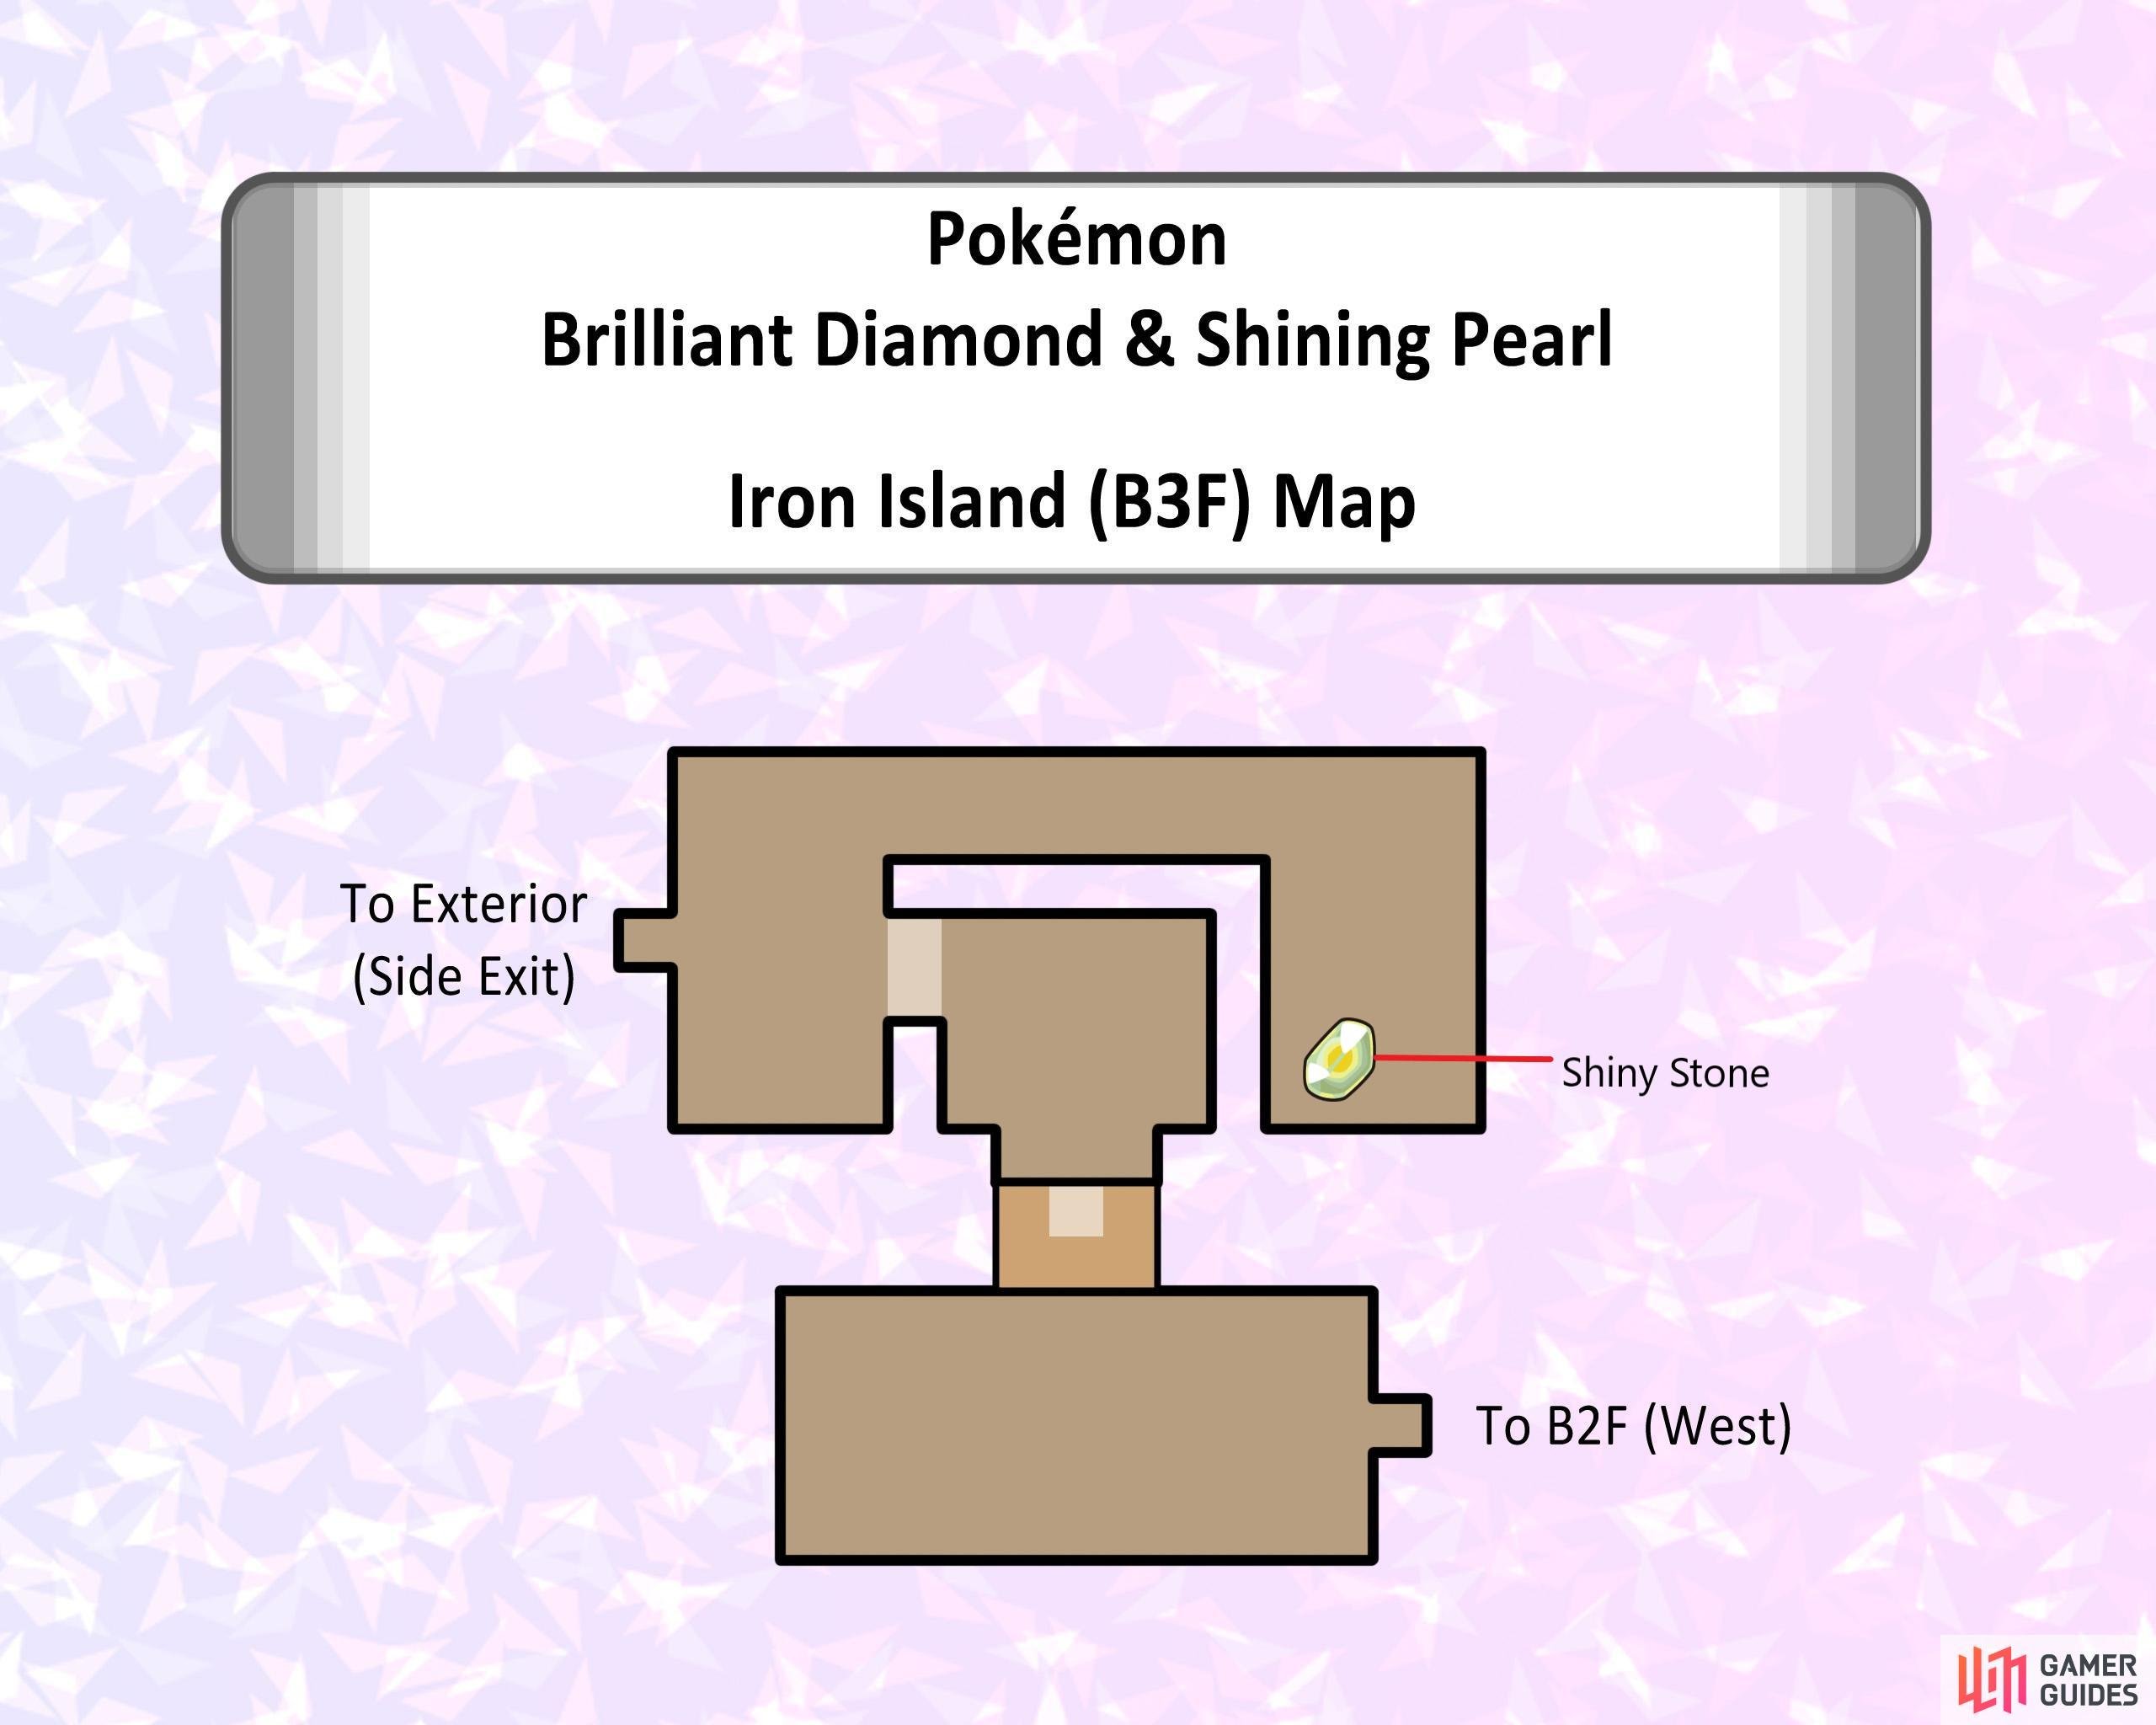 How to Get Rotom and Change its Form - Best/Rare Pokémon - Tips & Tricks, Pokémon: Brilliant Diamond & Shining Pearl